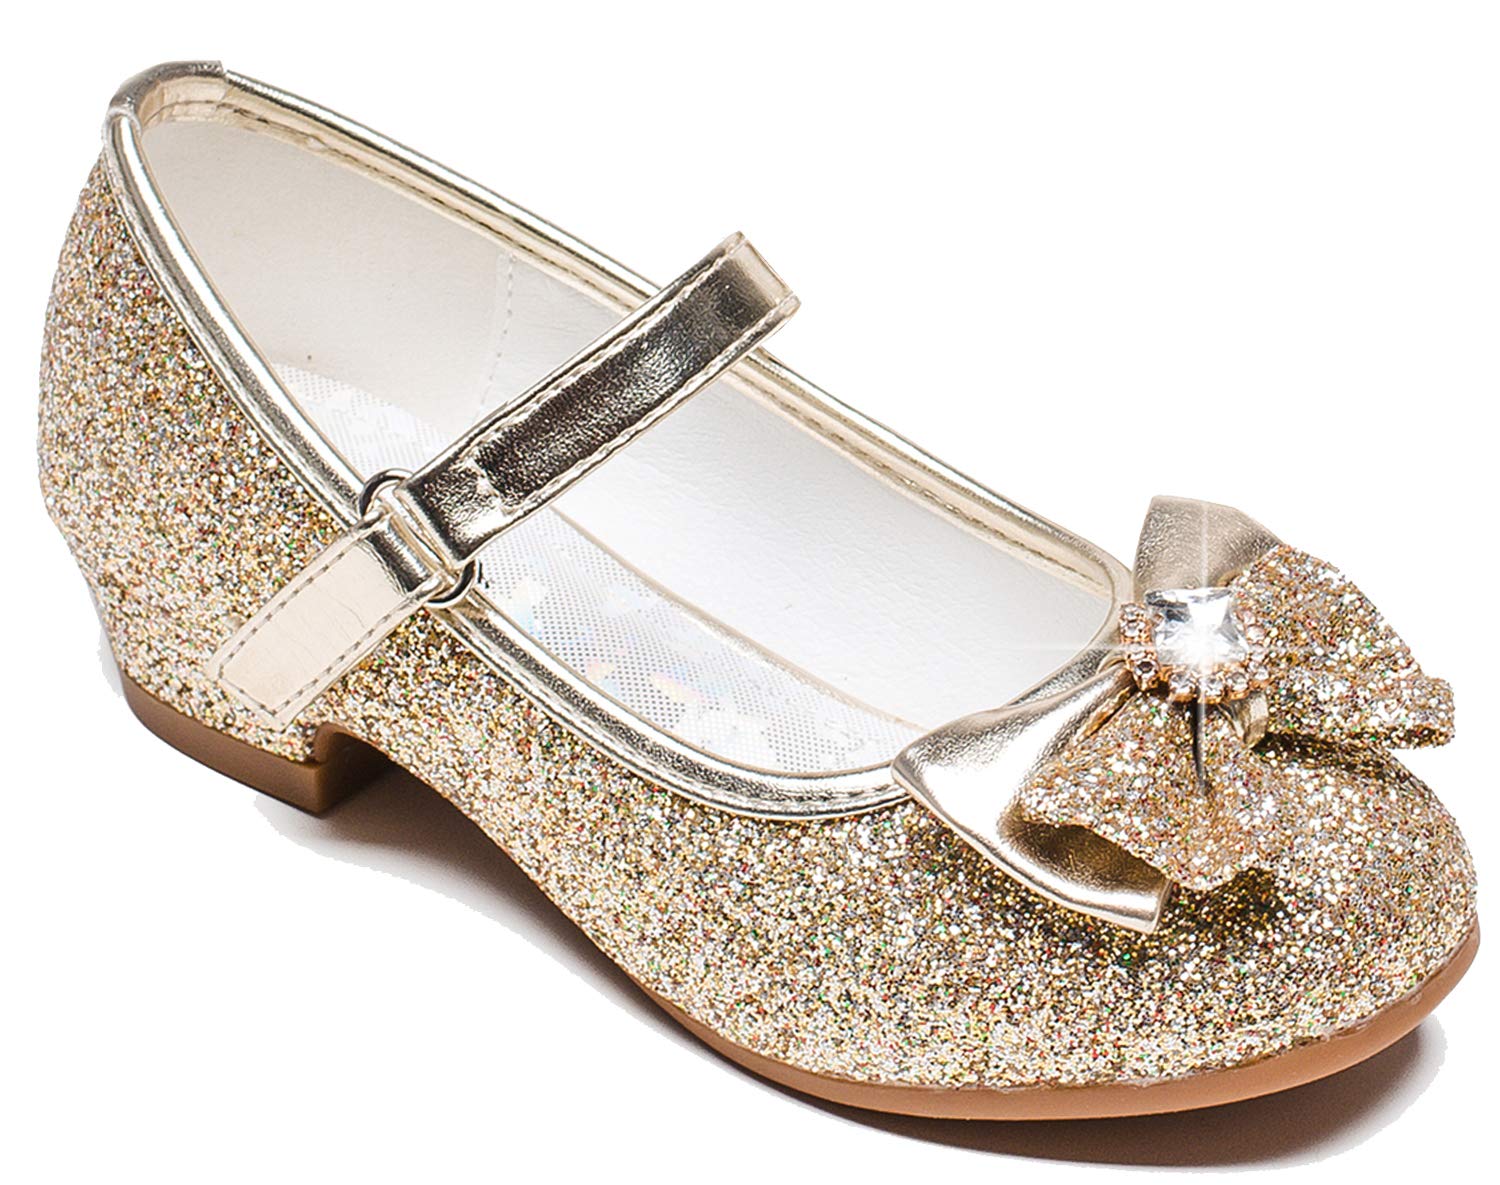 Furdeour girls Mary Jane Shoes Size 10 Wedding Princess gold Dress Shoes Bridesmaid Kids Party Flower Low High Heel glitter Shoe